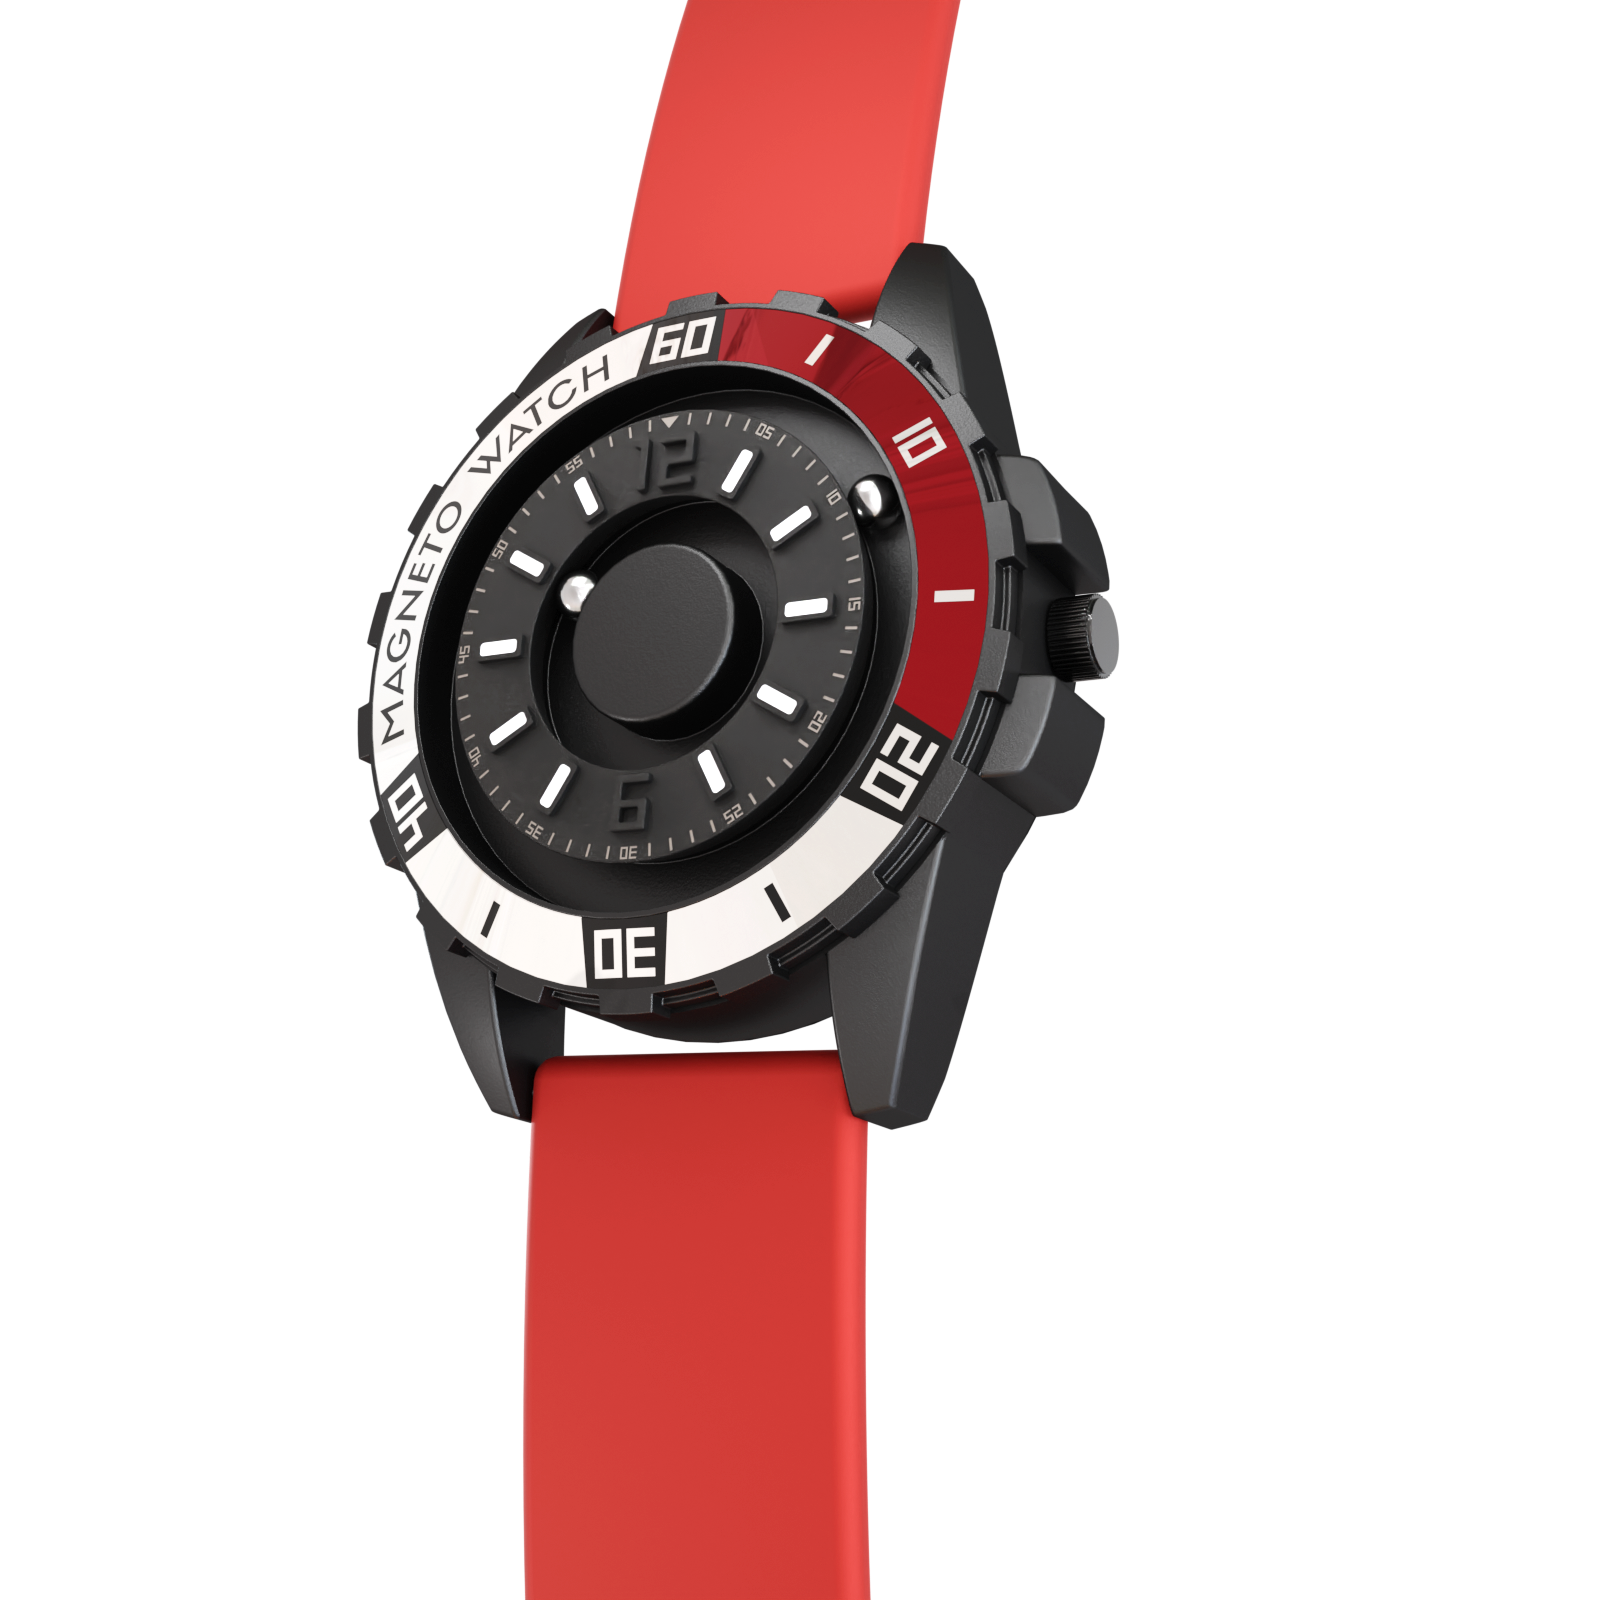 Magneto Jupiter] Anniversary gift from my girlfriend : r/Watches